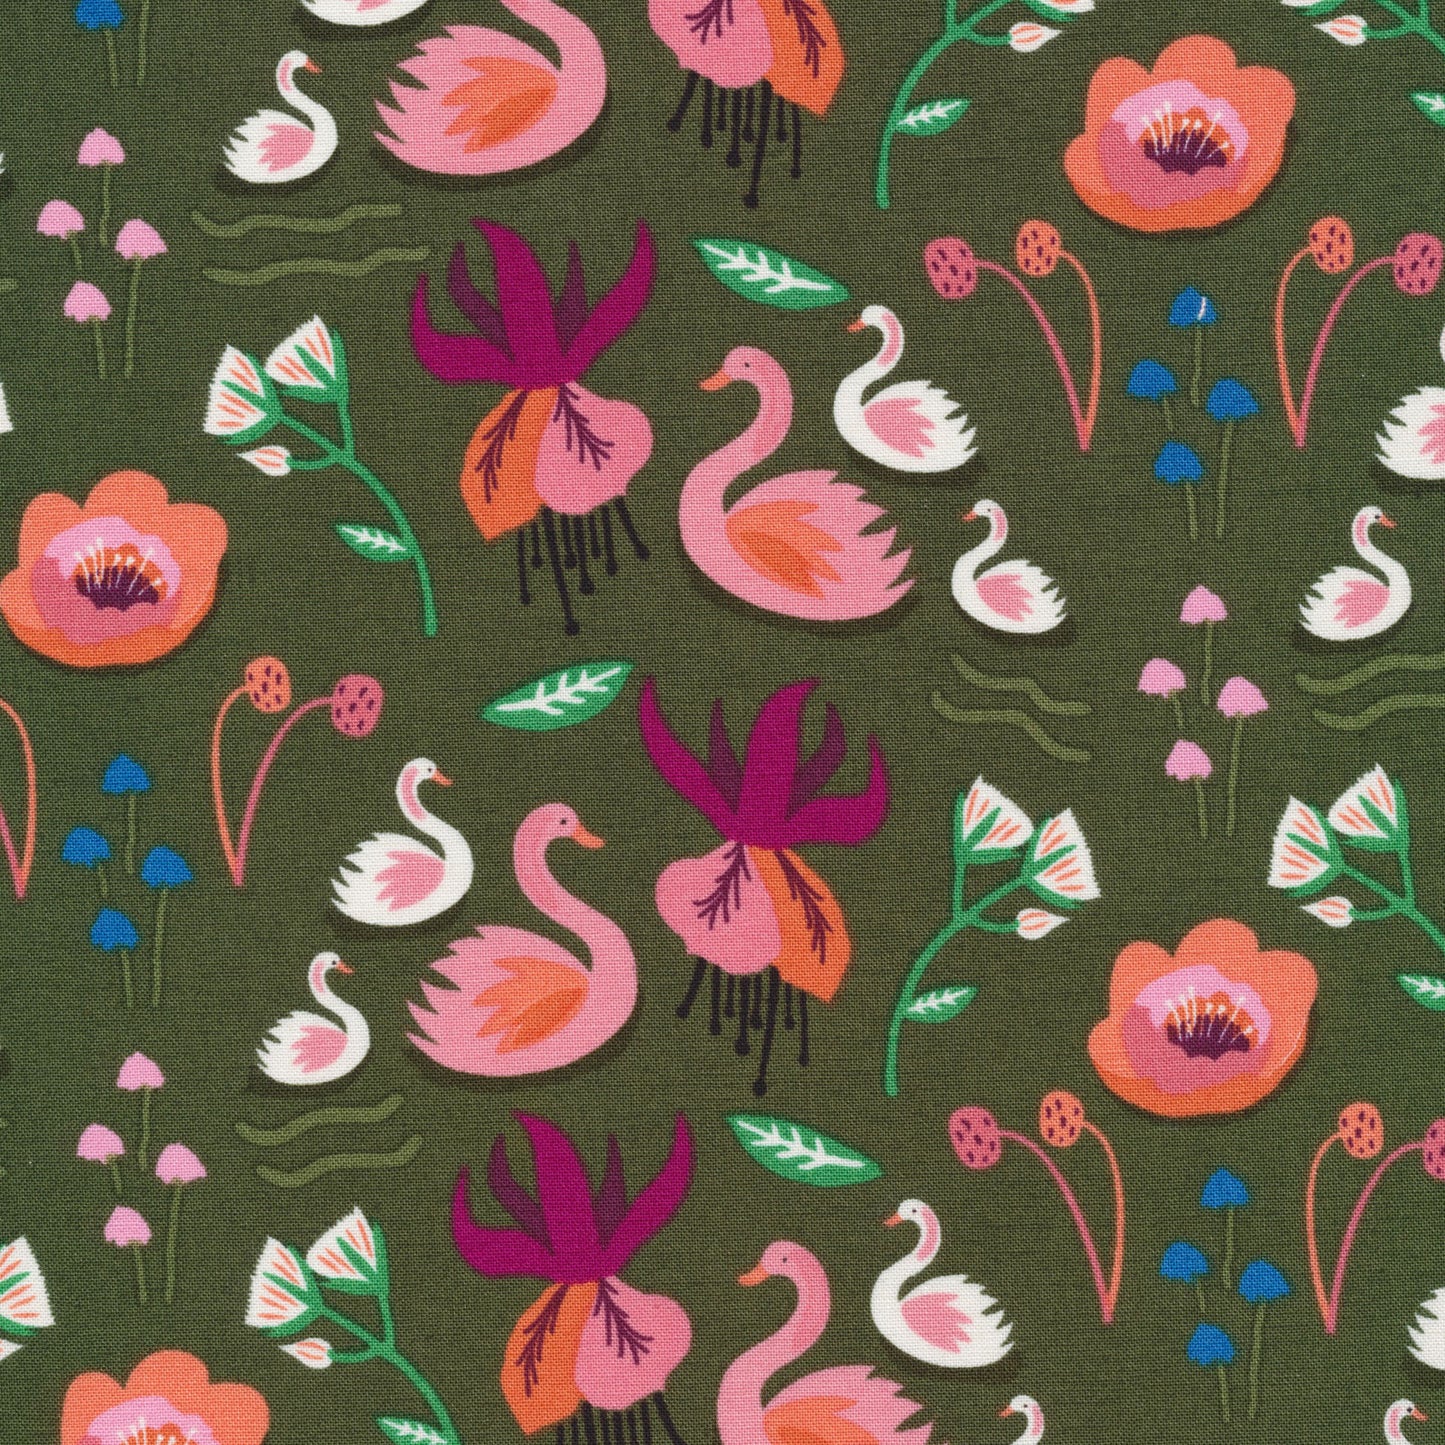 Spring Tides - 227144 - Spring Riviere - Kate Merritt - Cloud 9 Fabrics - Organic Cotton half yard quilting fabric - floral